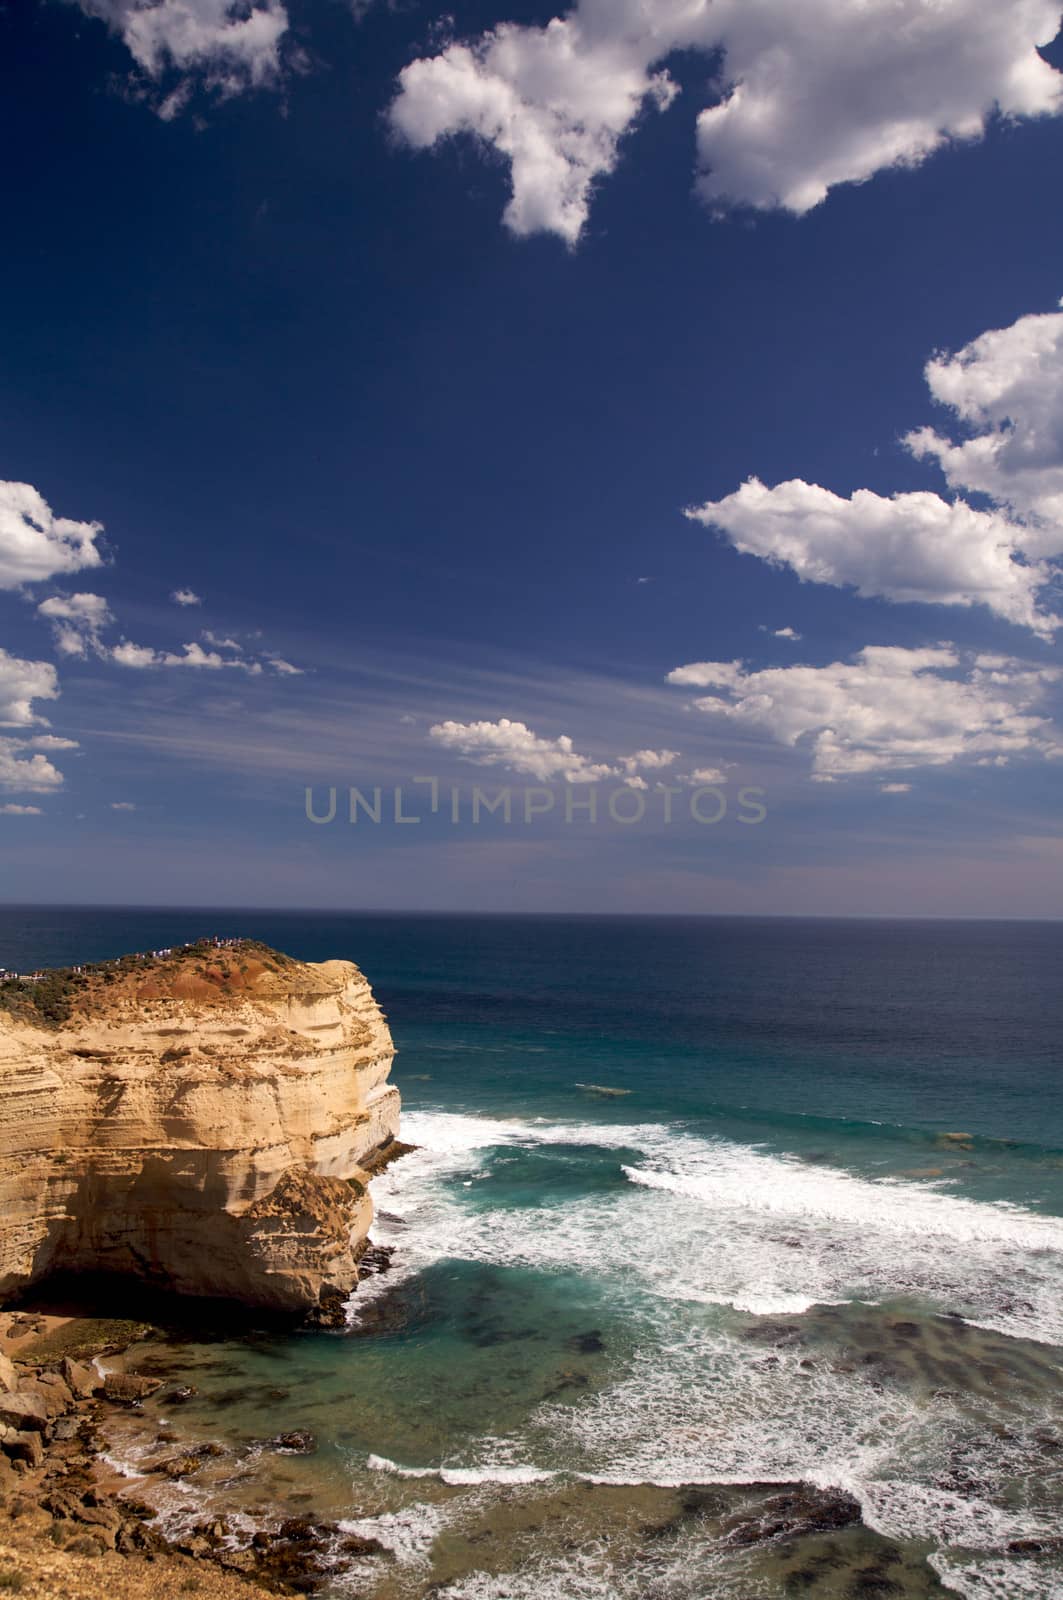 Great Ocean Road With a View of Twelve Apostles in Australia